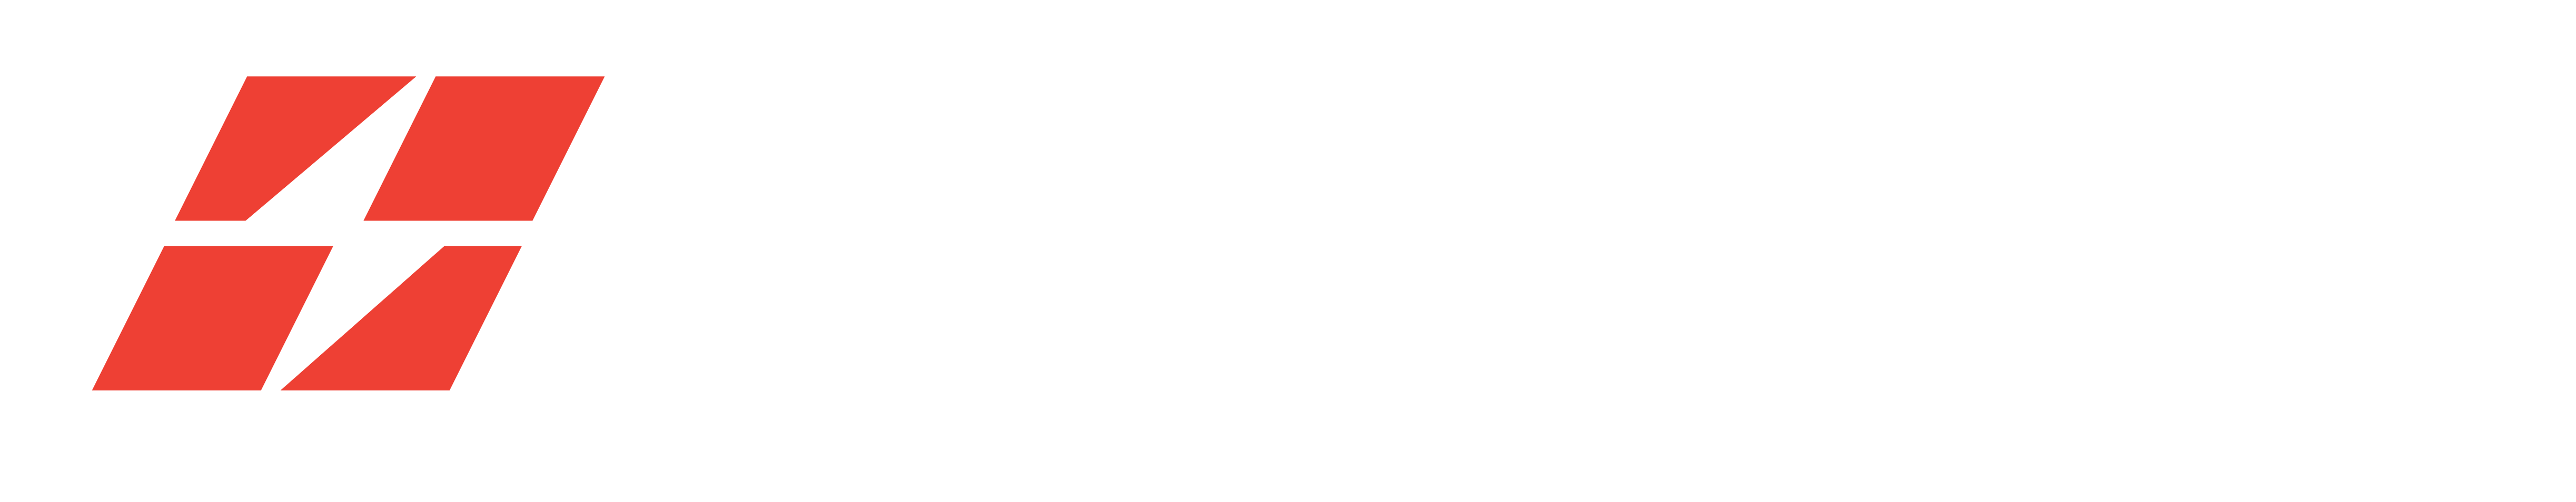 Inferno Solar white logo